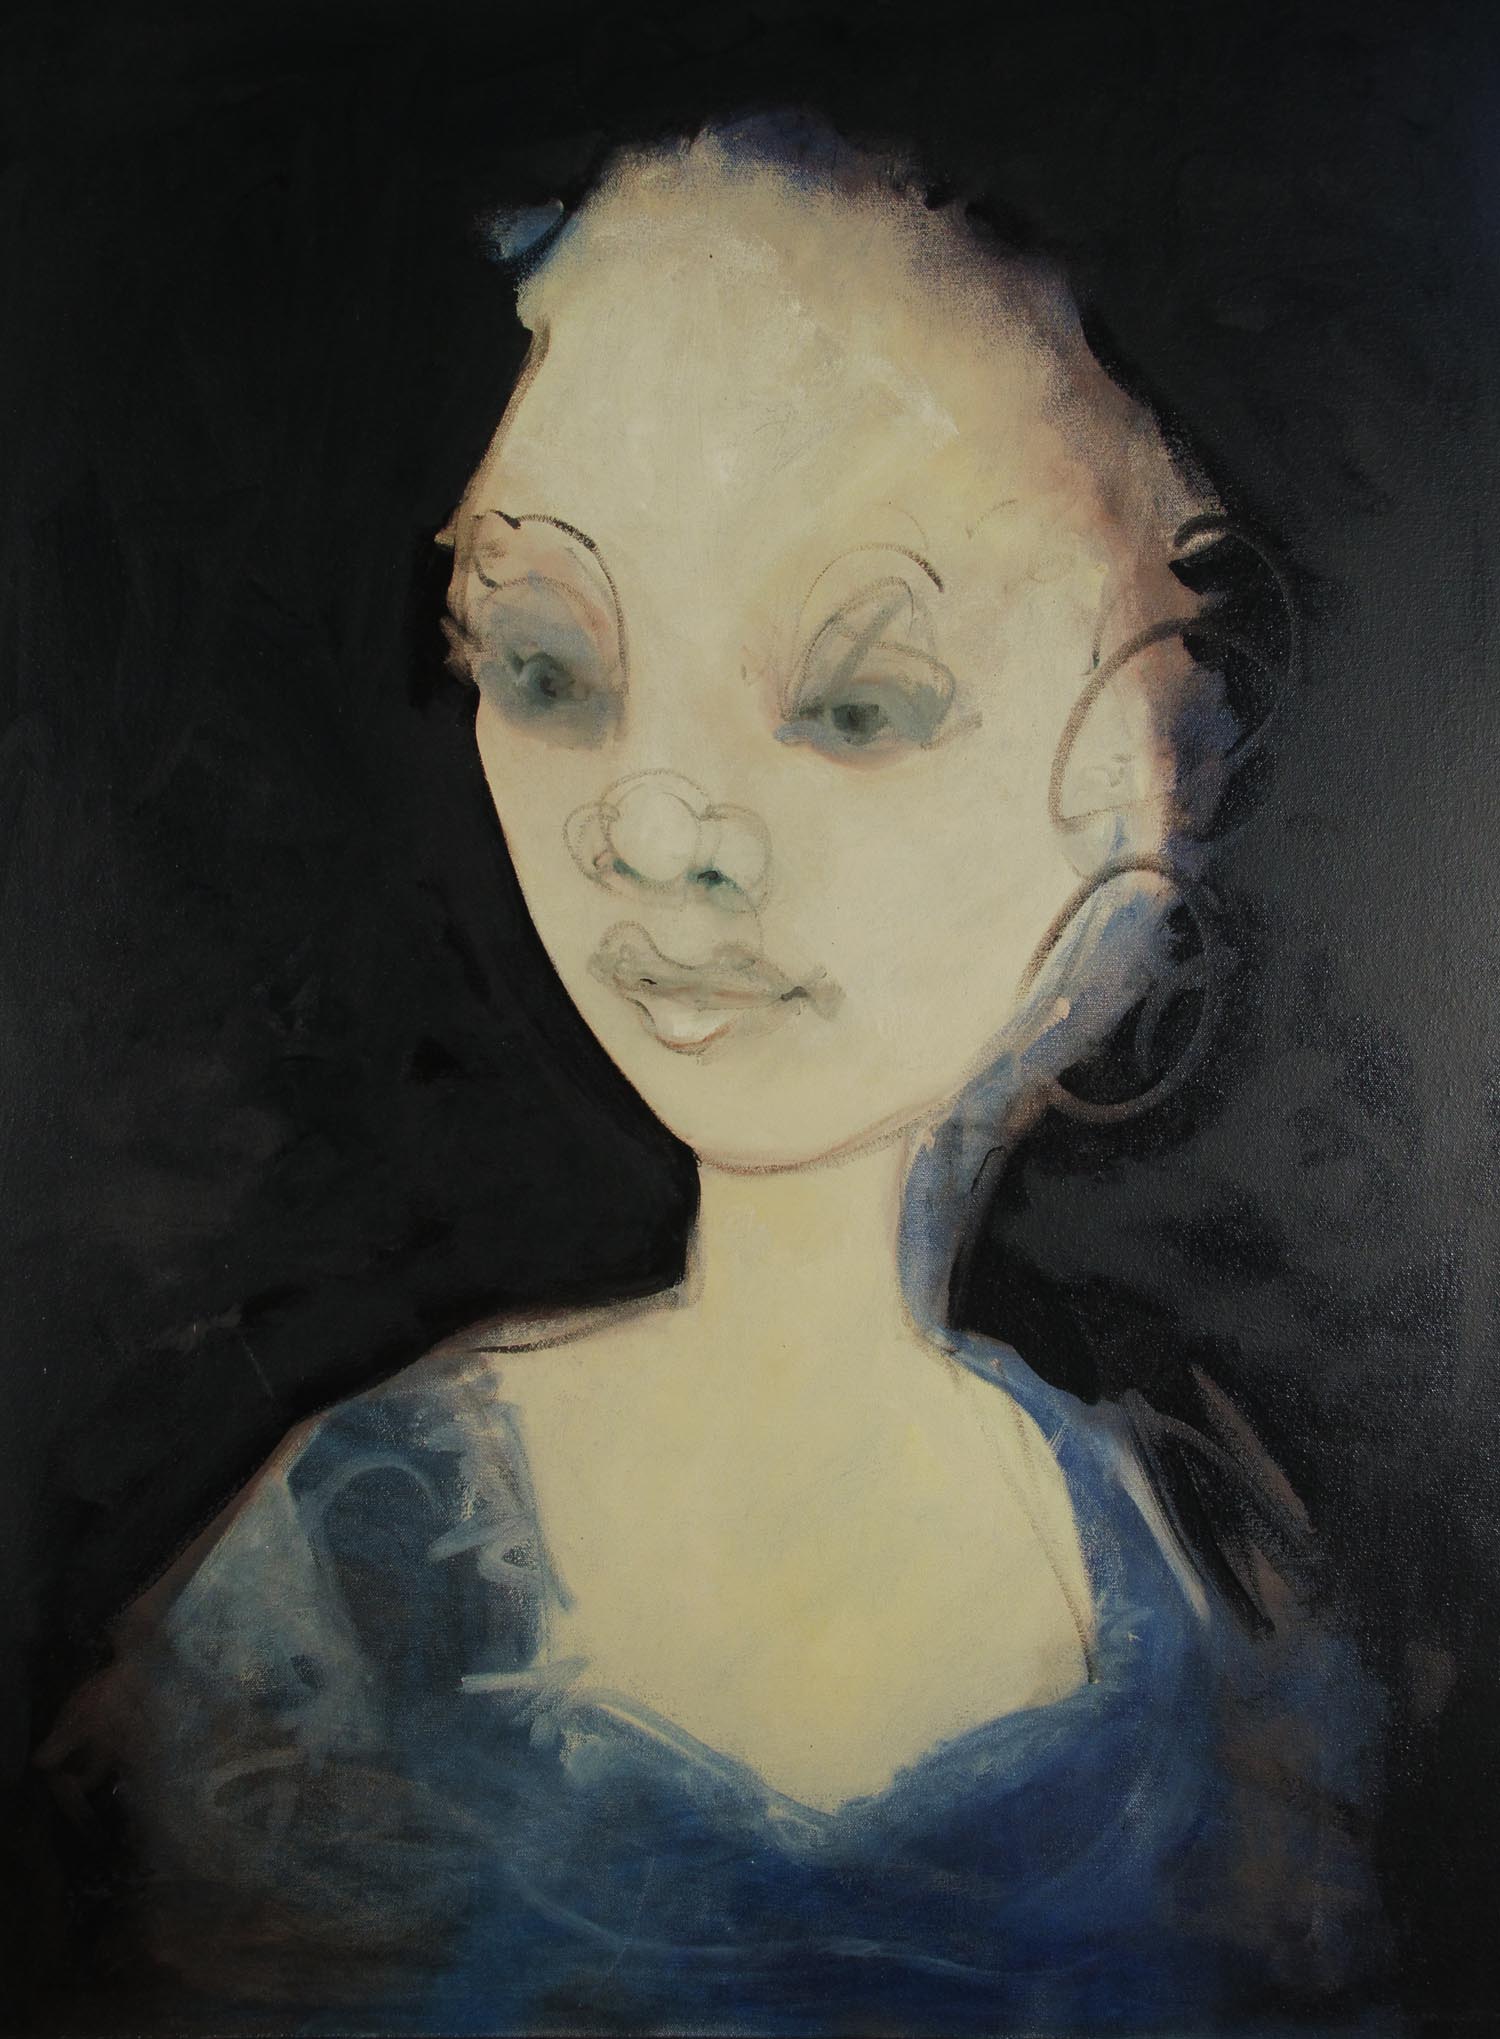 Carlotta Oil painting of woman sad eyes Sam Roloff 3245